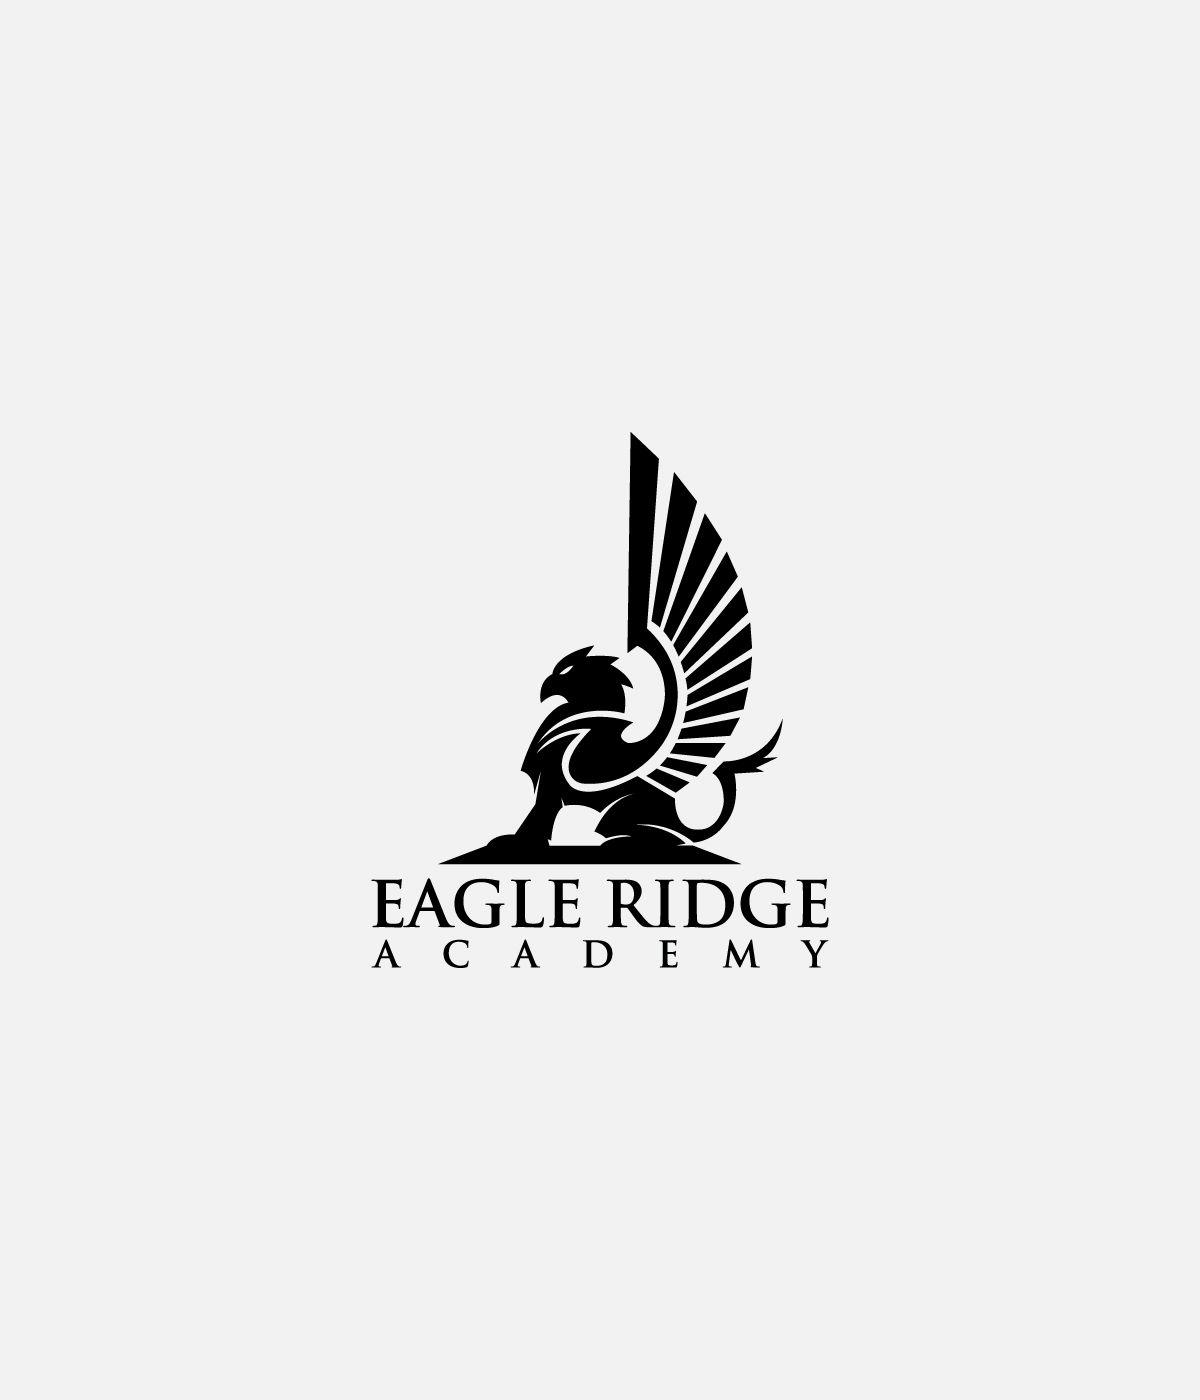 Gryphon Logo - Serious, Traditional, School Logo Design for Eagle Ridge Academy